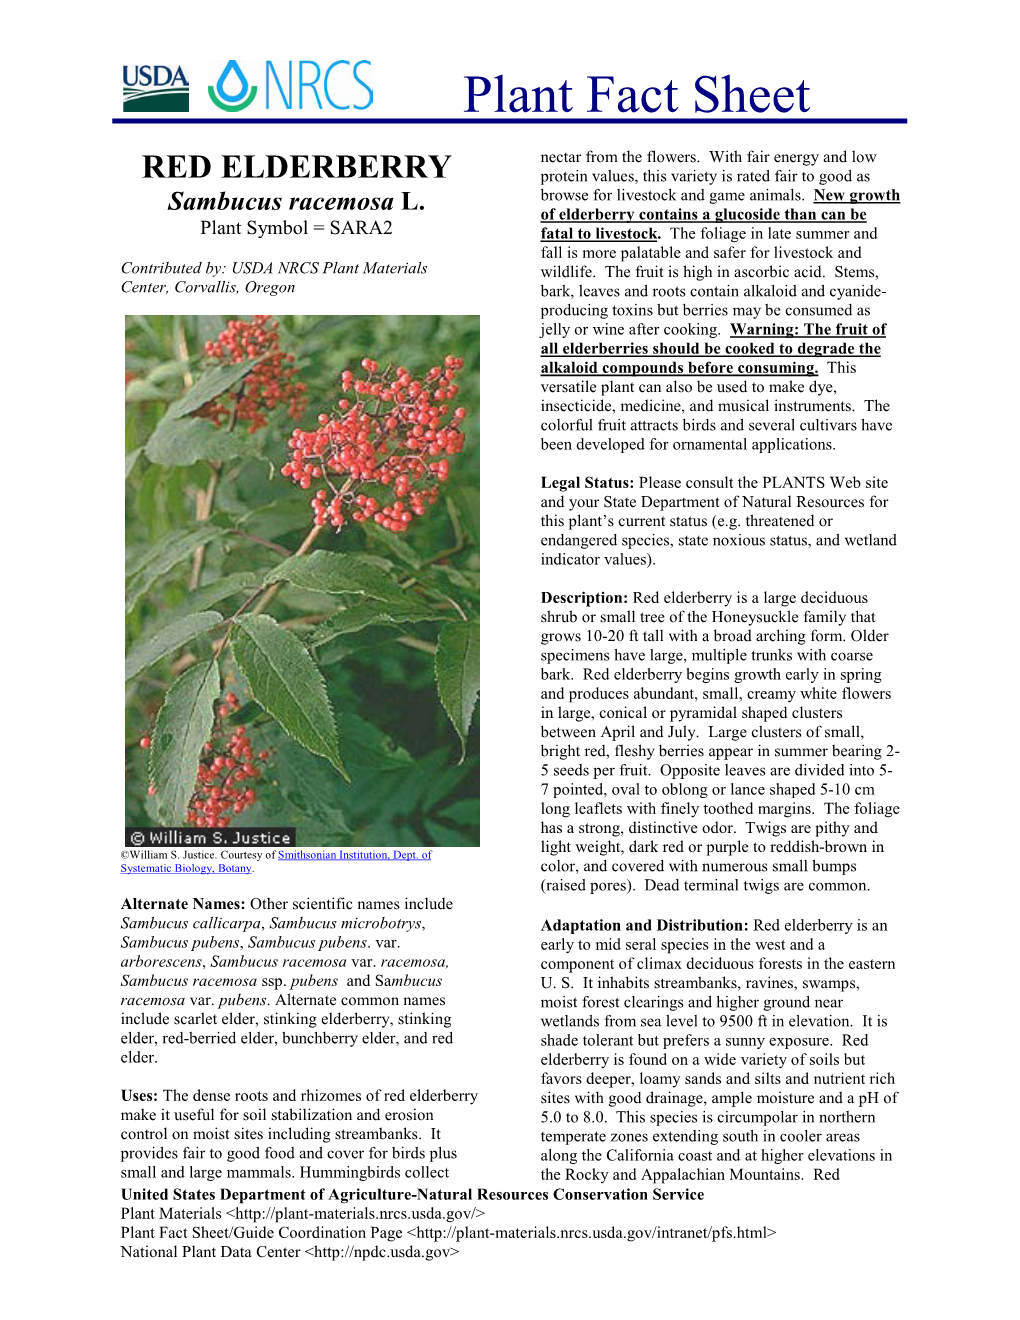 Plant Fact Sheet for Red Elderberry (Sambucus Racemosa)